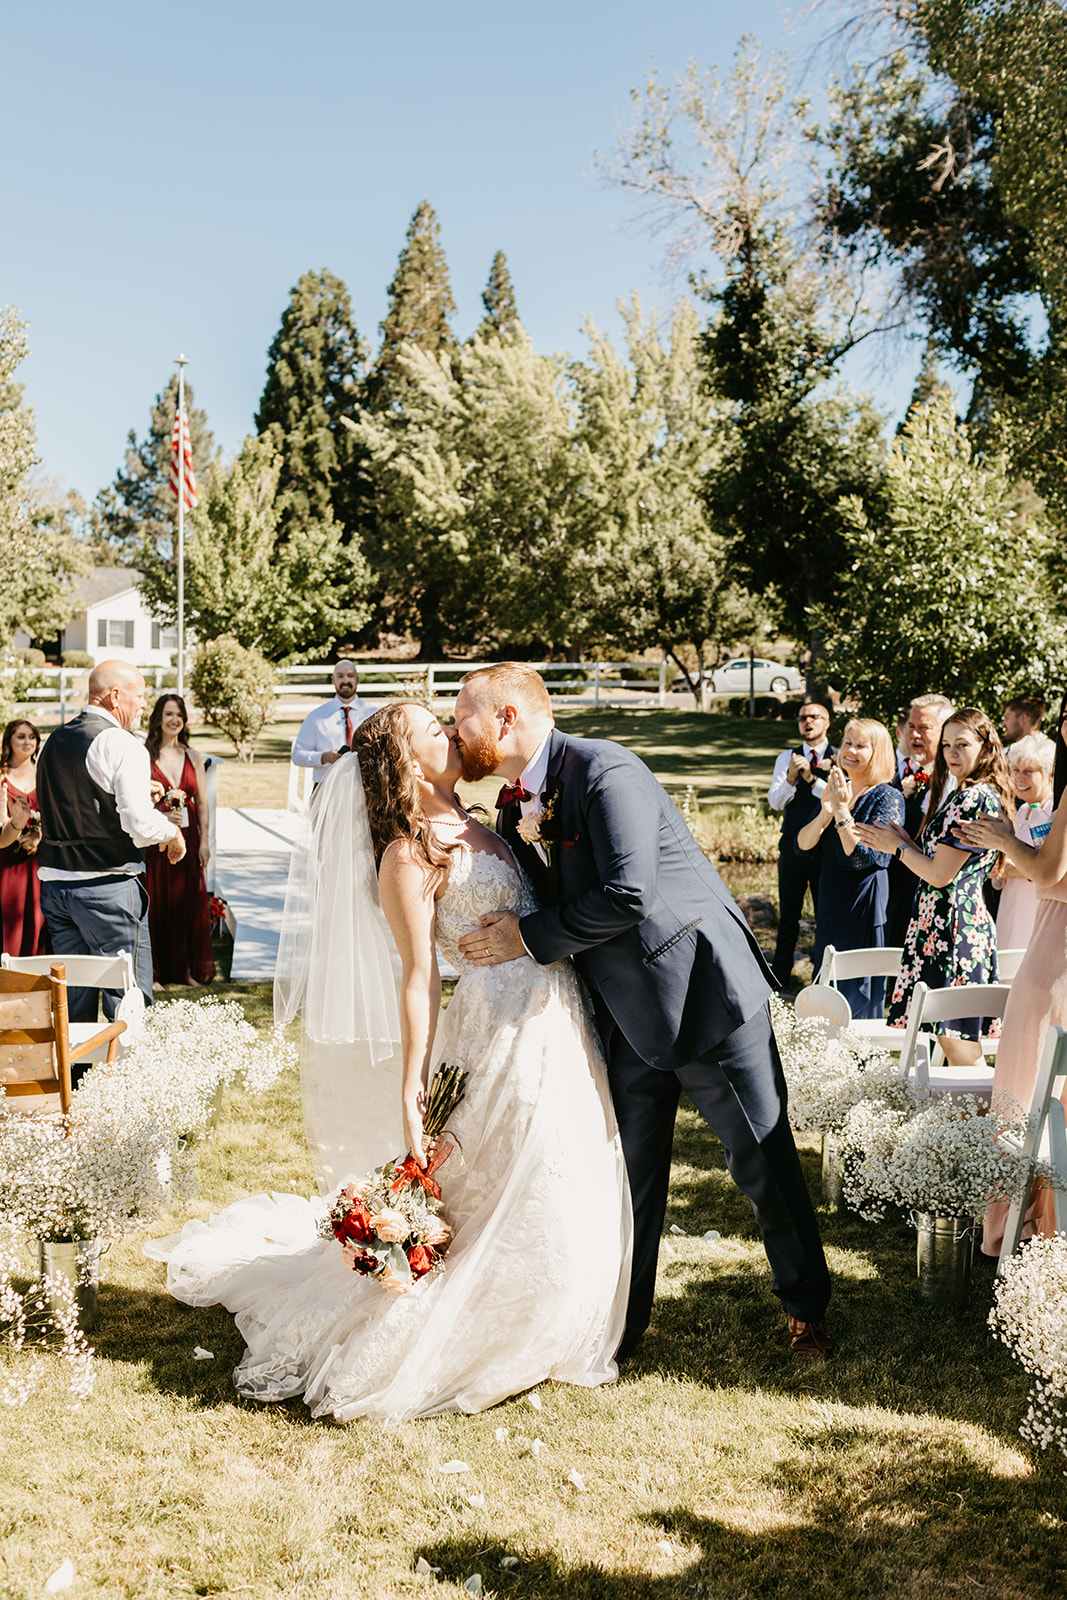 Ceremony during a reno nevada backyard wedding